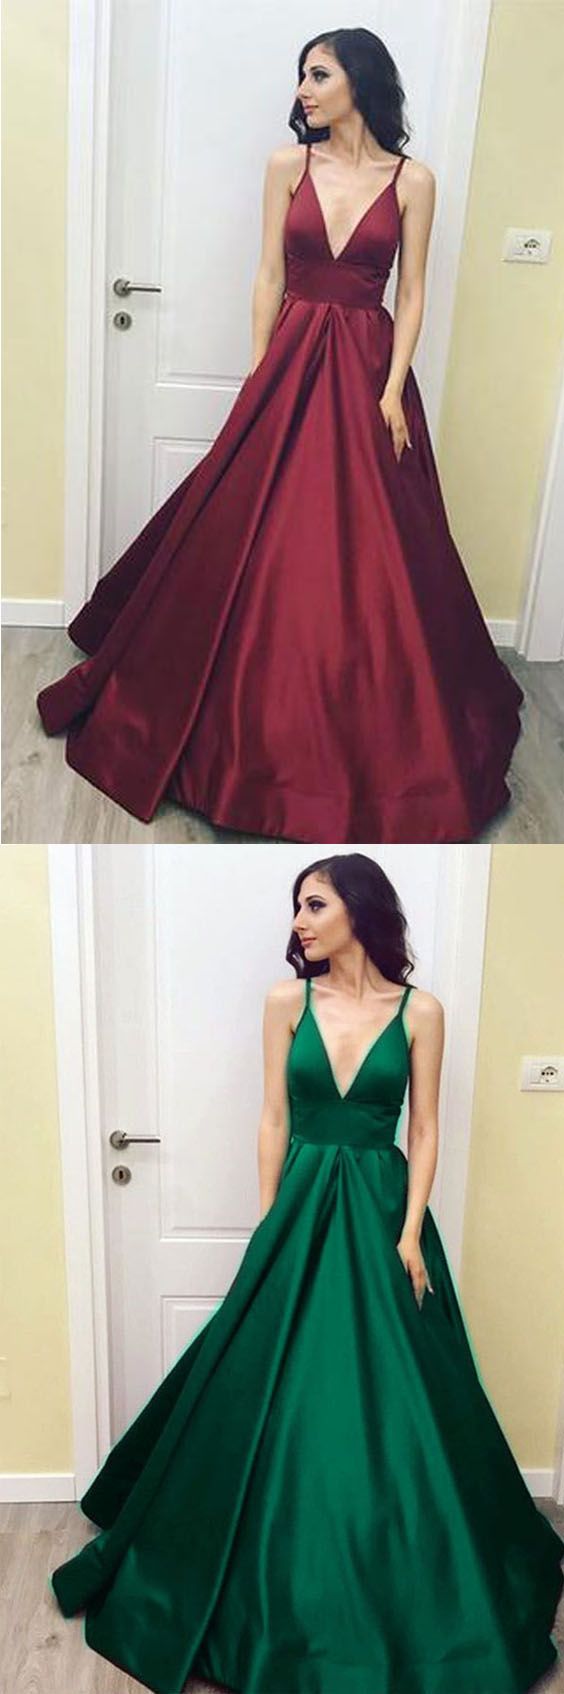 Simple V-neck Floor-length Satin Burgundy Prom Dress With Pockets M0817